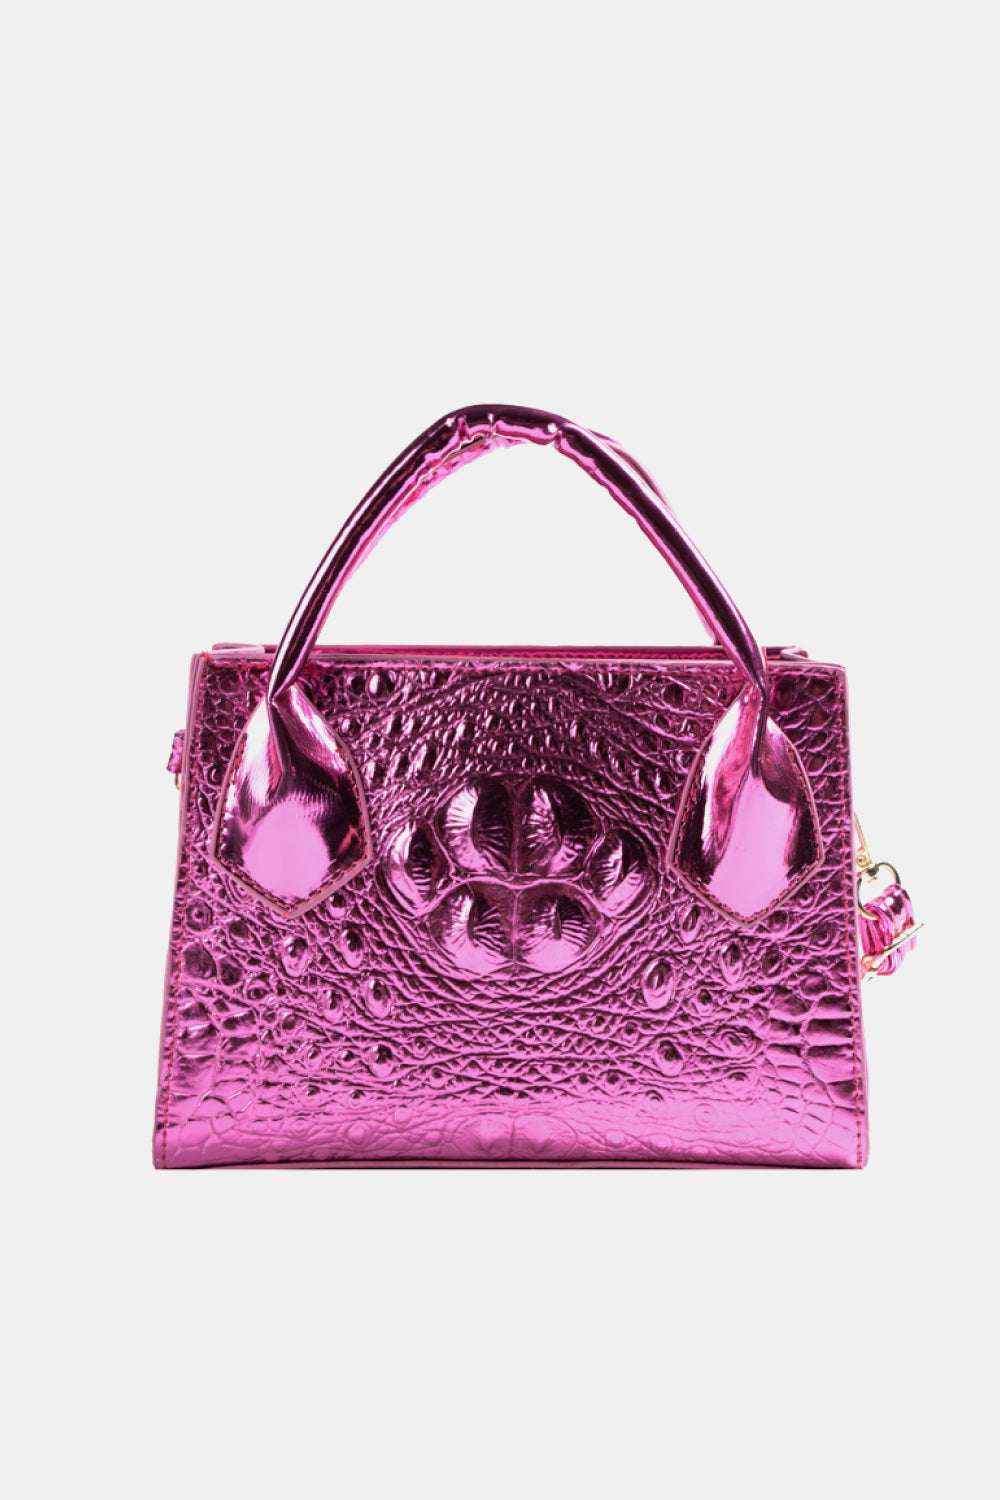 Textured PU Leather Crossbody Pink Bag